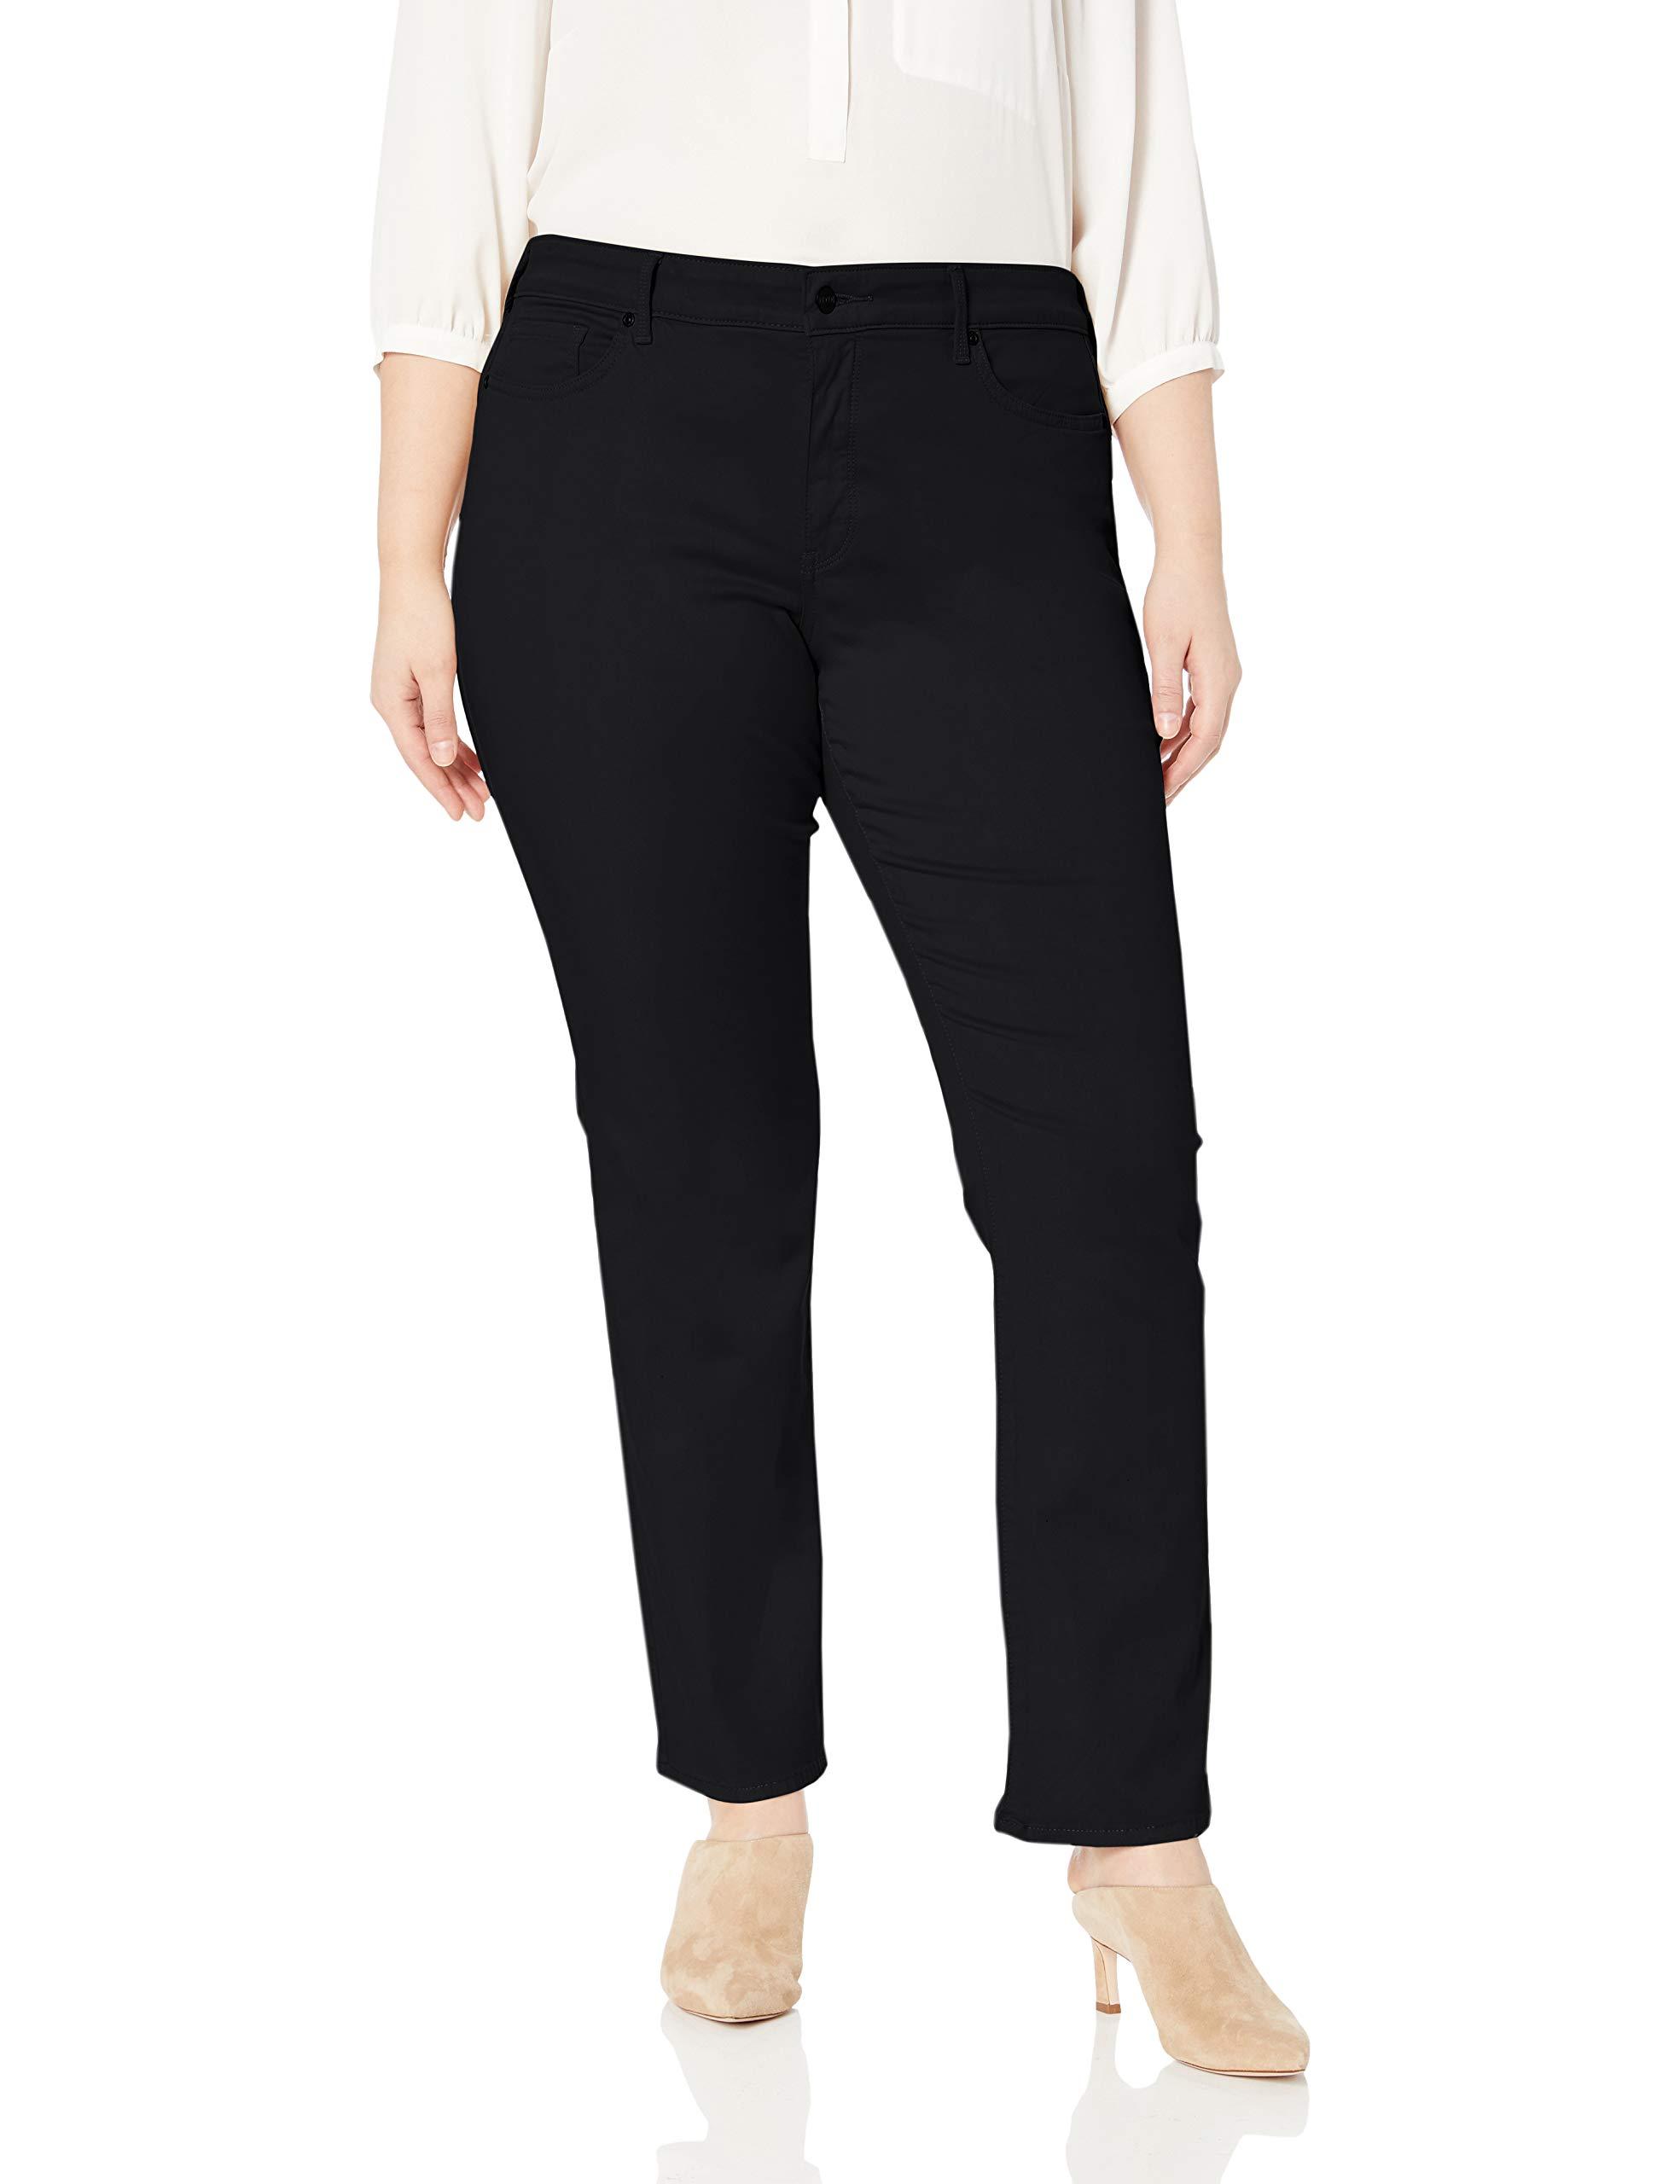 NYDJ Denim Plus Size Marilyn Straight Leg Jeans in Black - Save 36% - Lyst